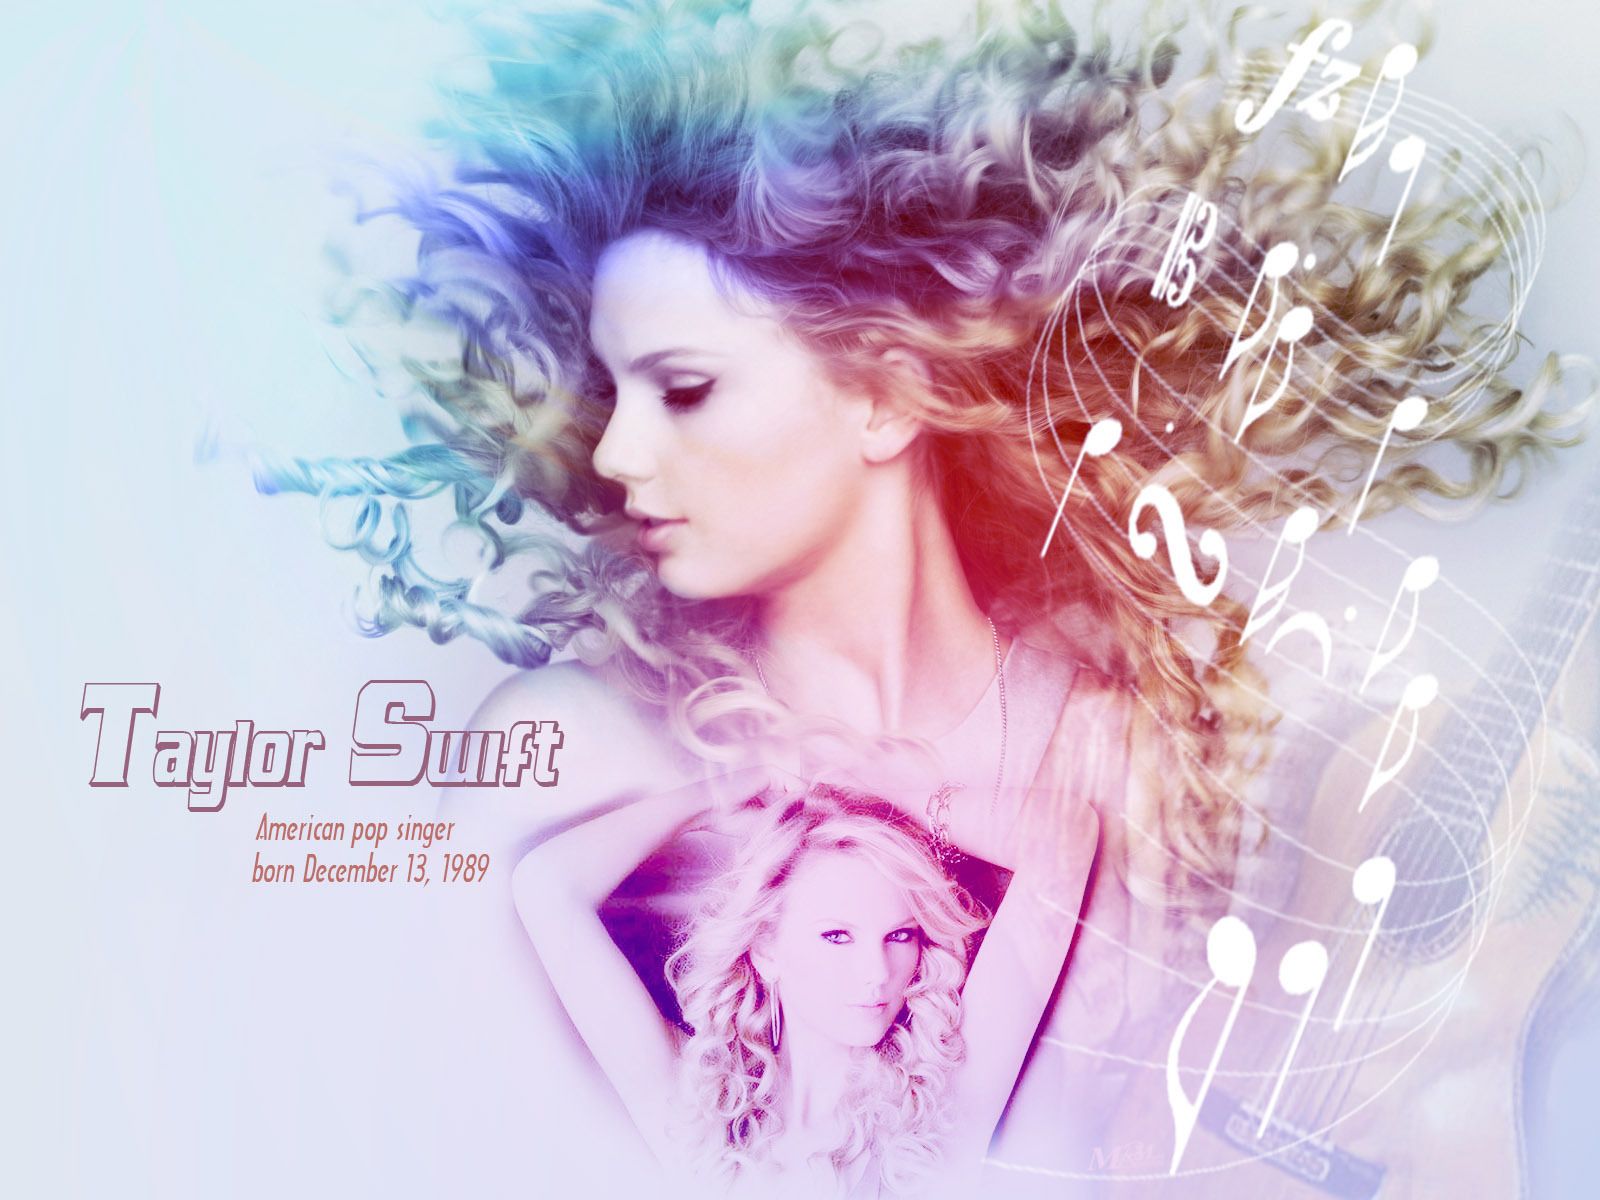 TS Wallpaper (Taylor Swift album) Wallpaper